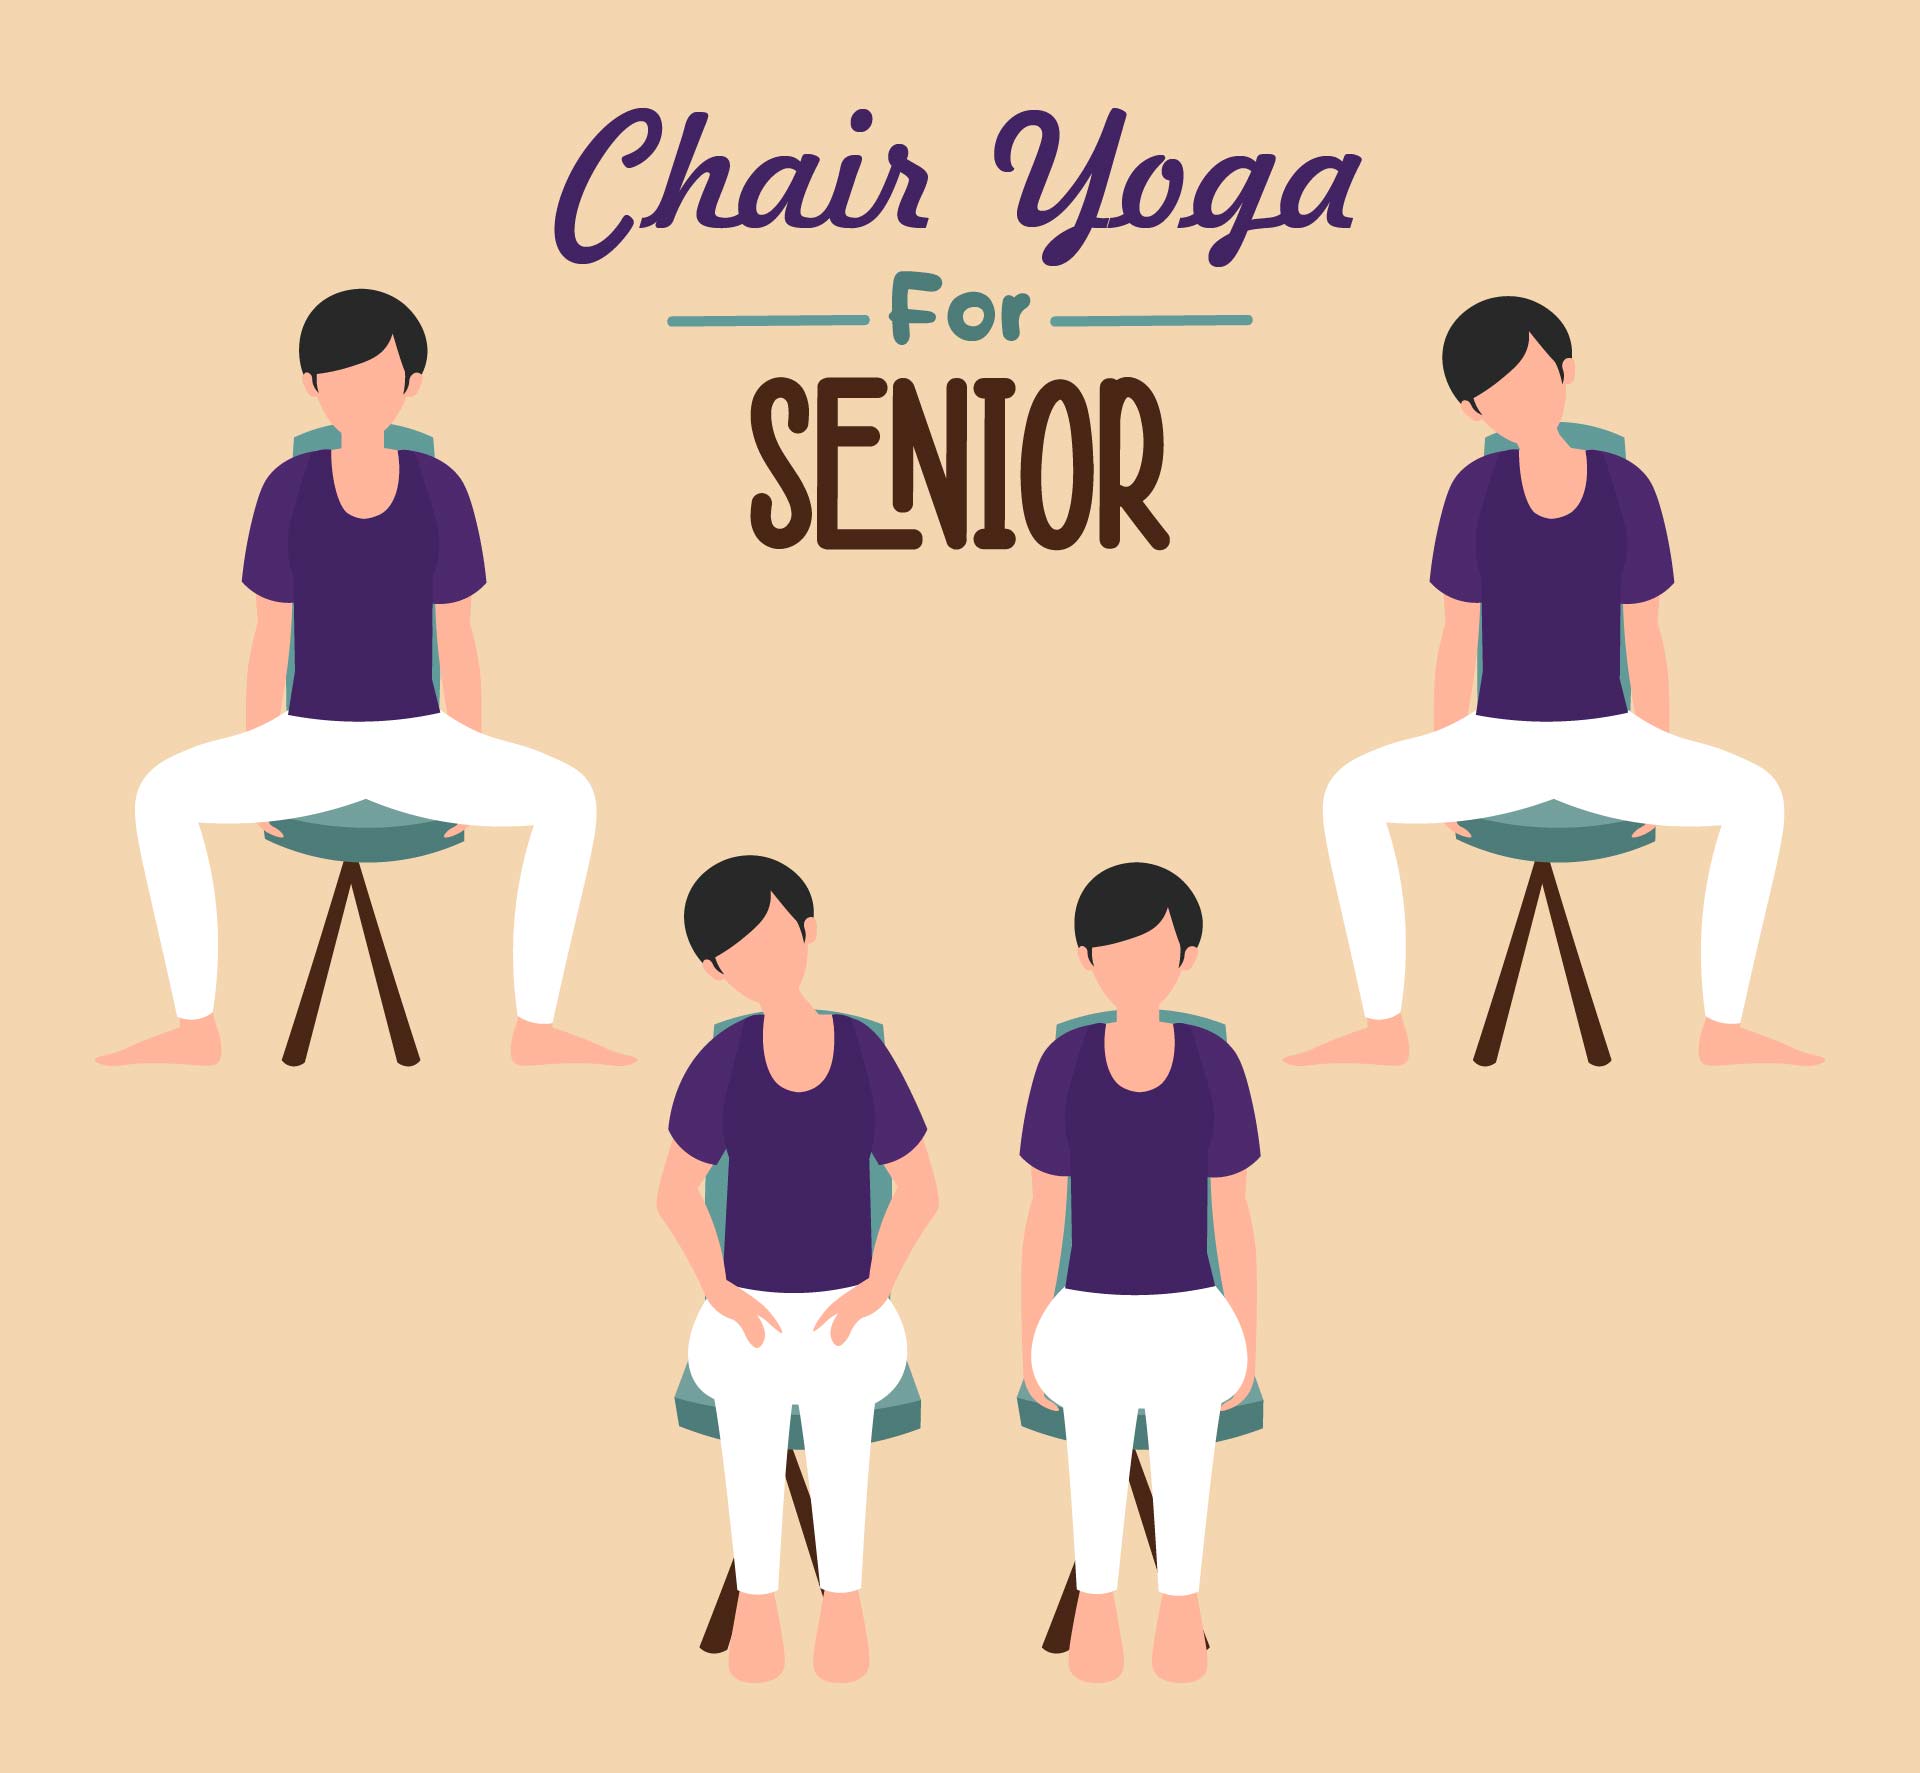 chair yoga poses for seniors 178416